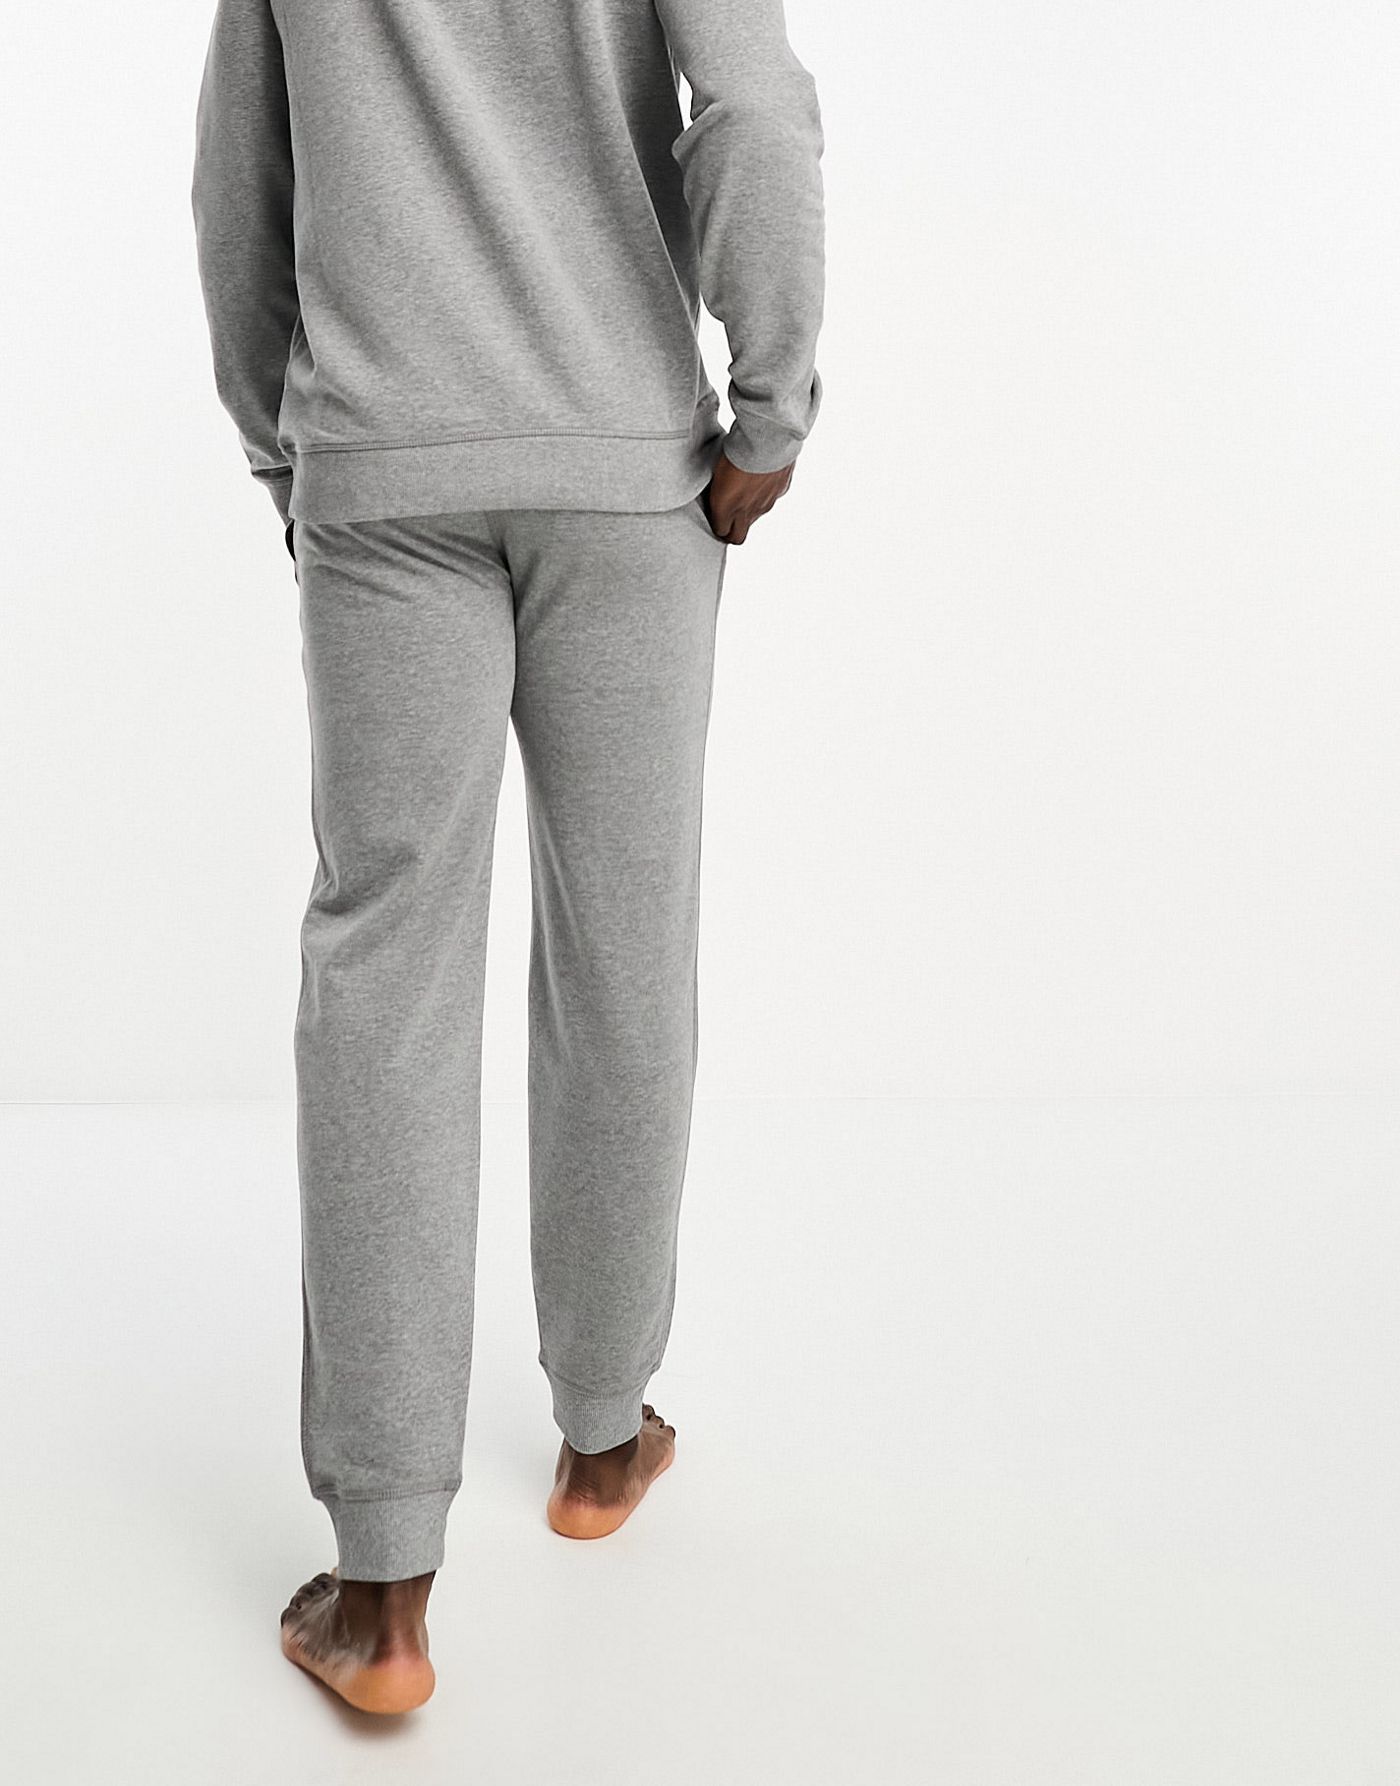 Tommy Hilfiger Original pyjama trousers in grey